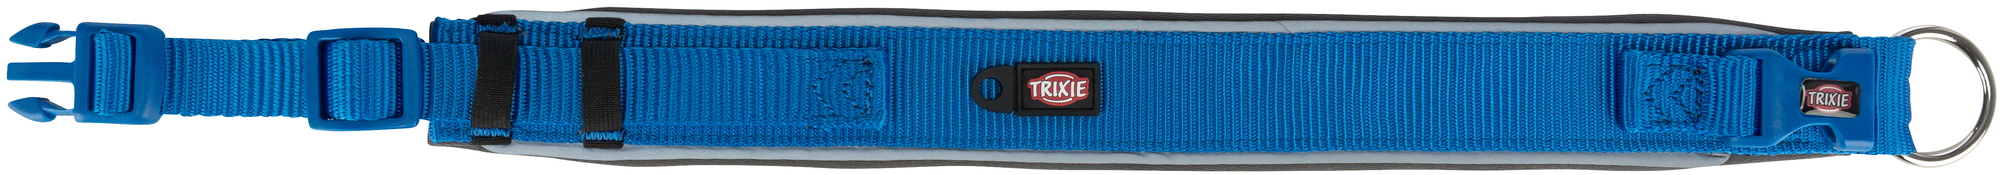 Trixie Premium coleira extra grande - Azul Real/Cinza Grafite